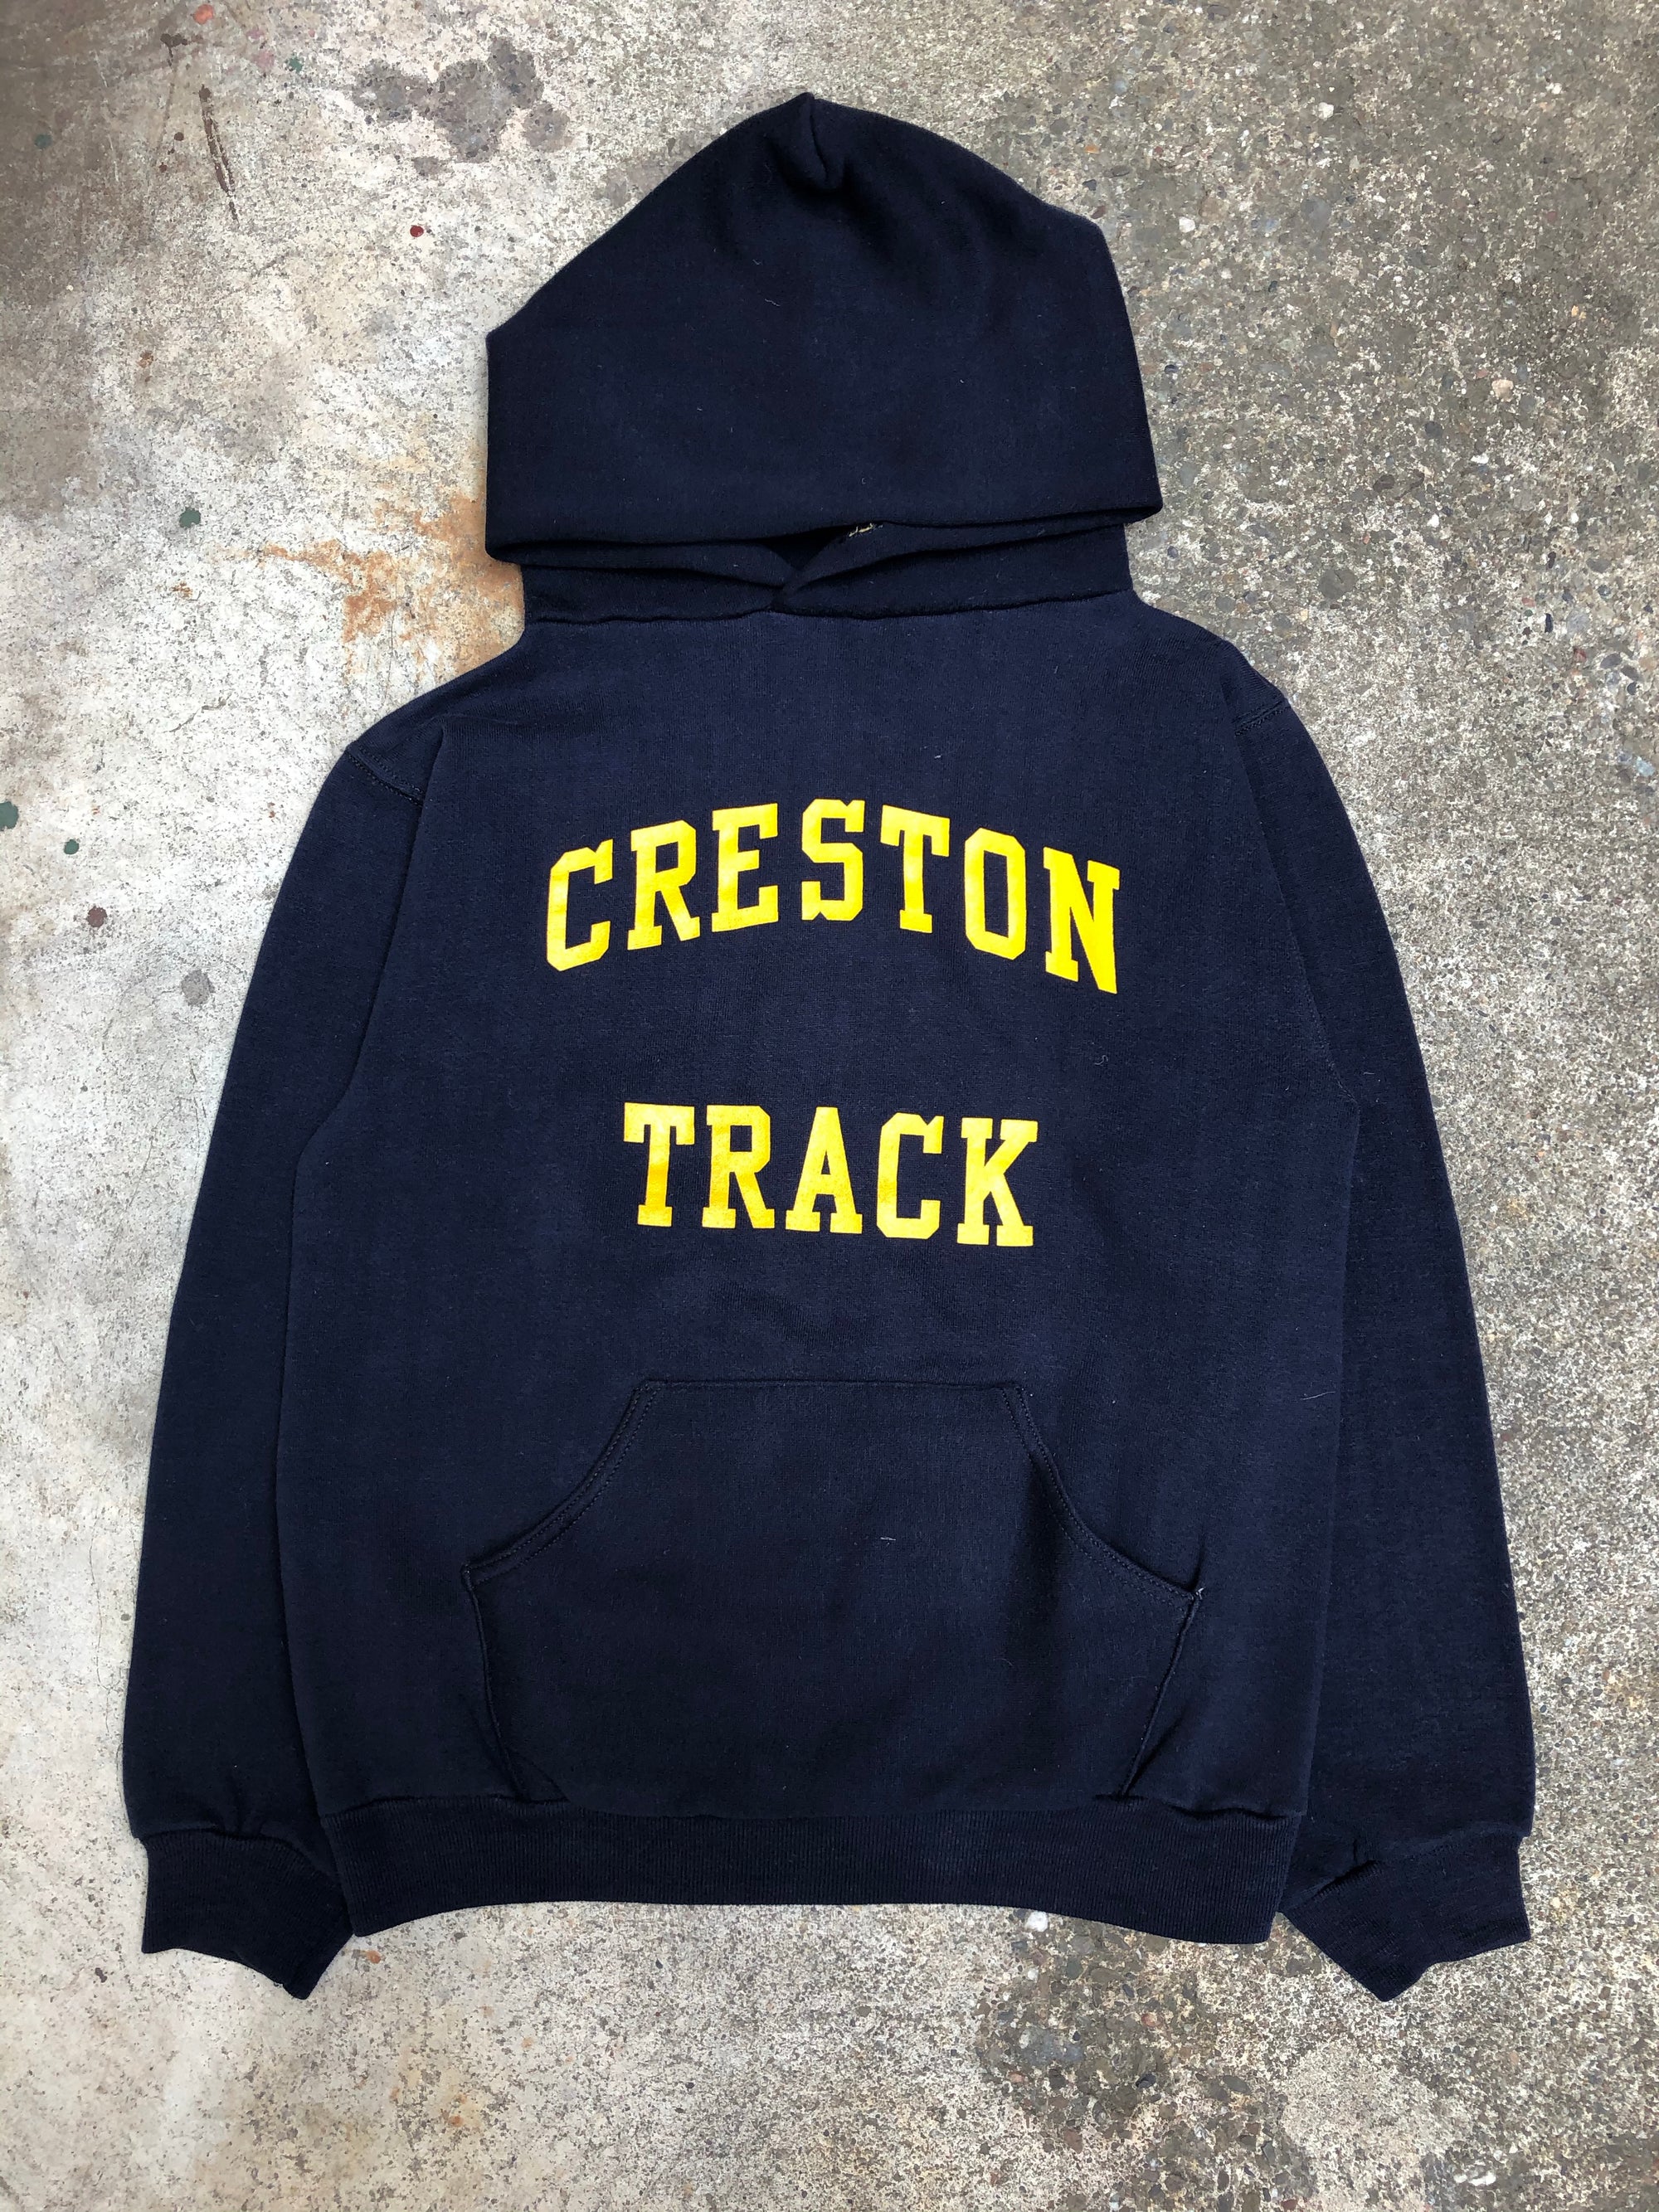 1970s Russell Navy “Creston Track” Hoodie